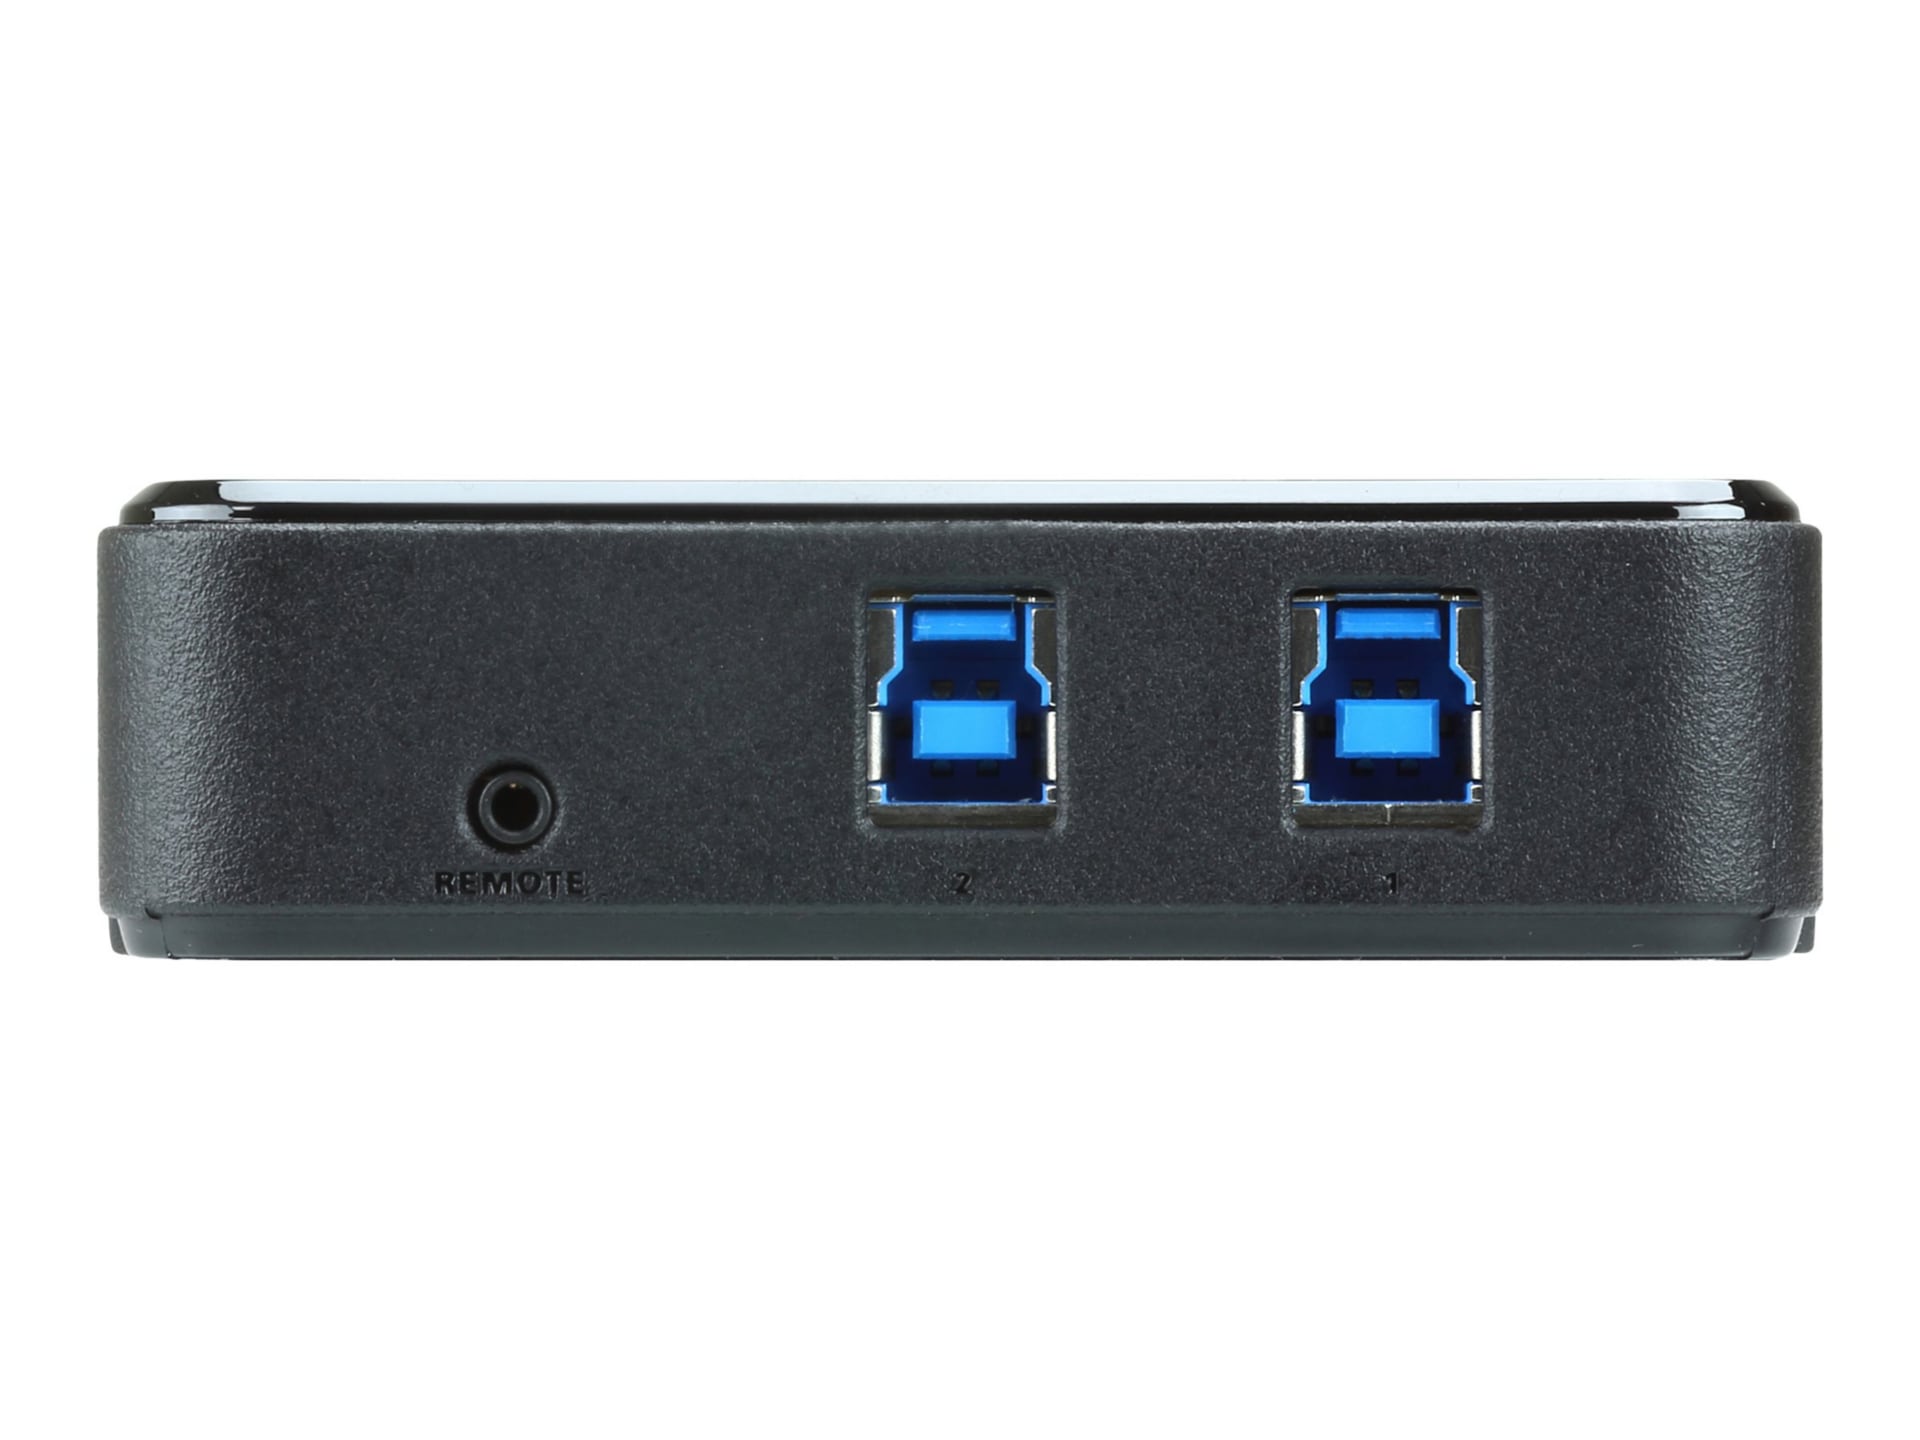 2 Port USB 3.0 Peripheral Sharing Switch - Hubs USB-A